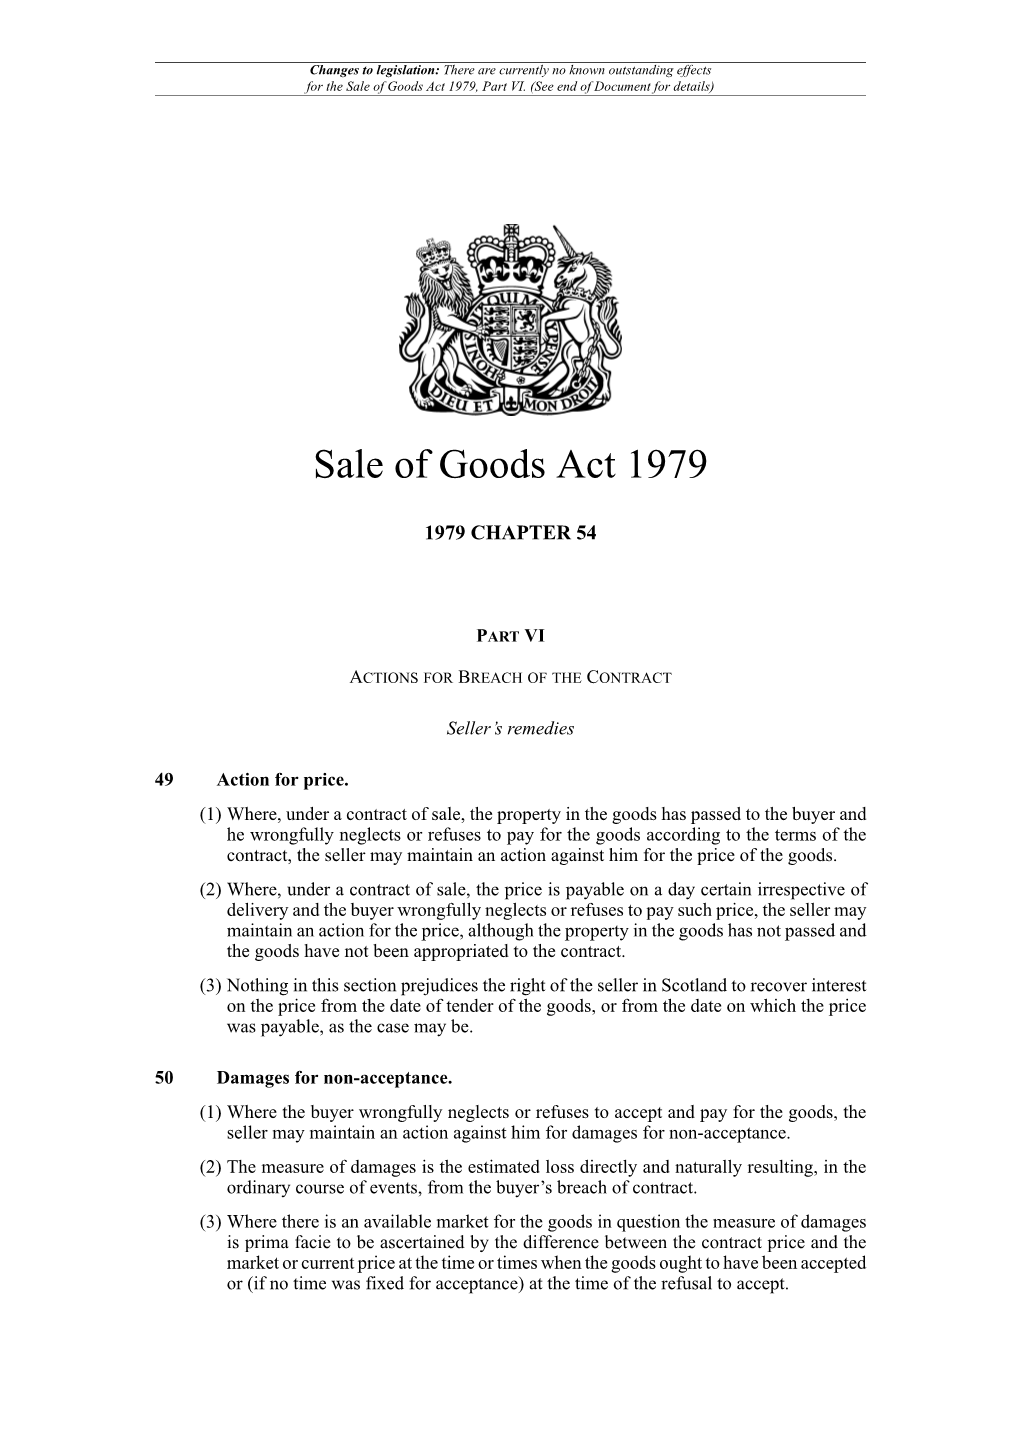 Sale of Goods Act 1979, Part VI